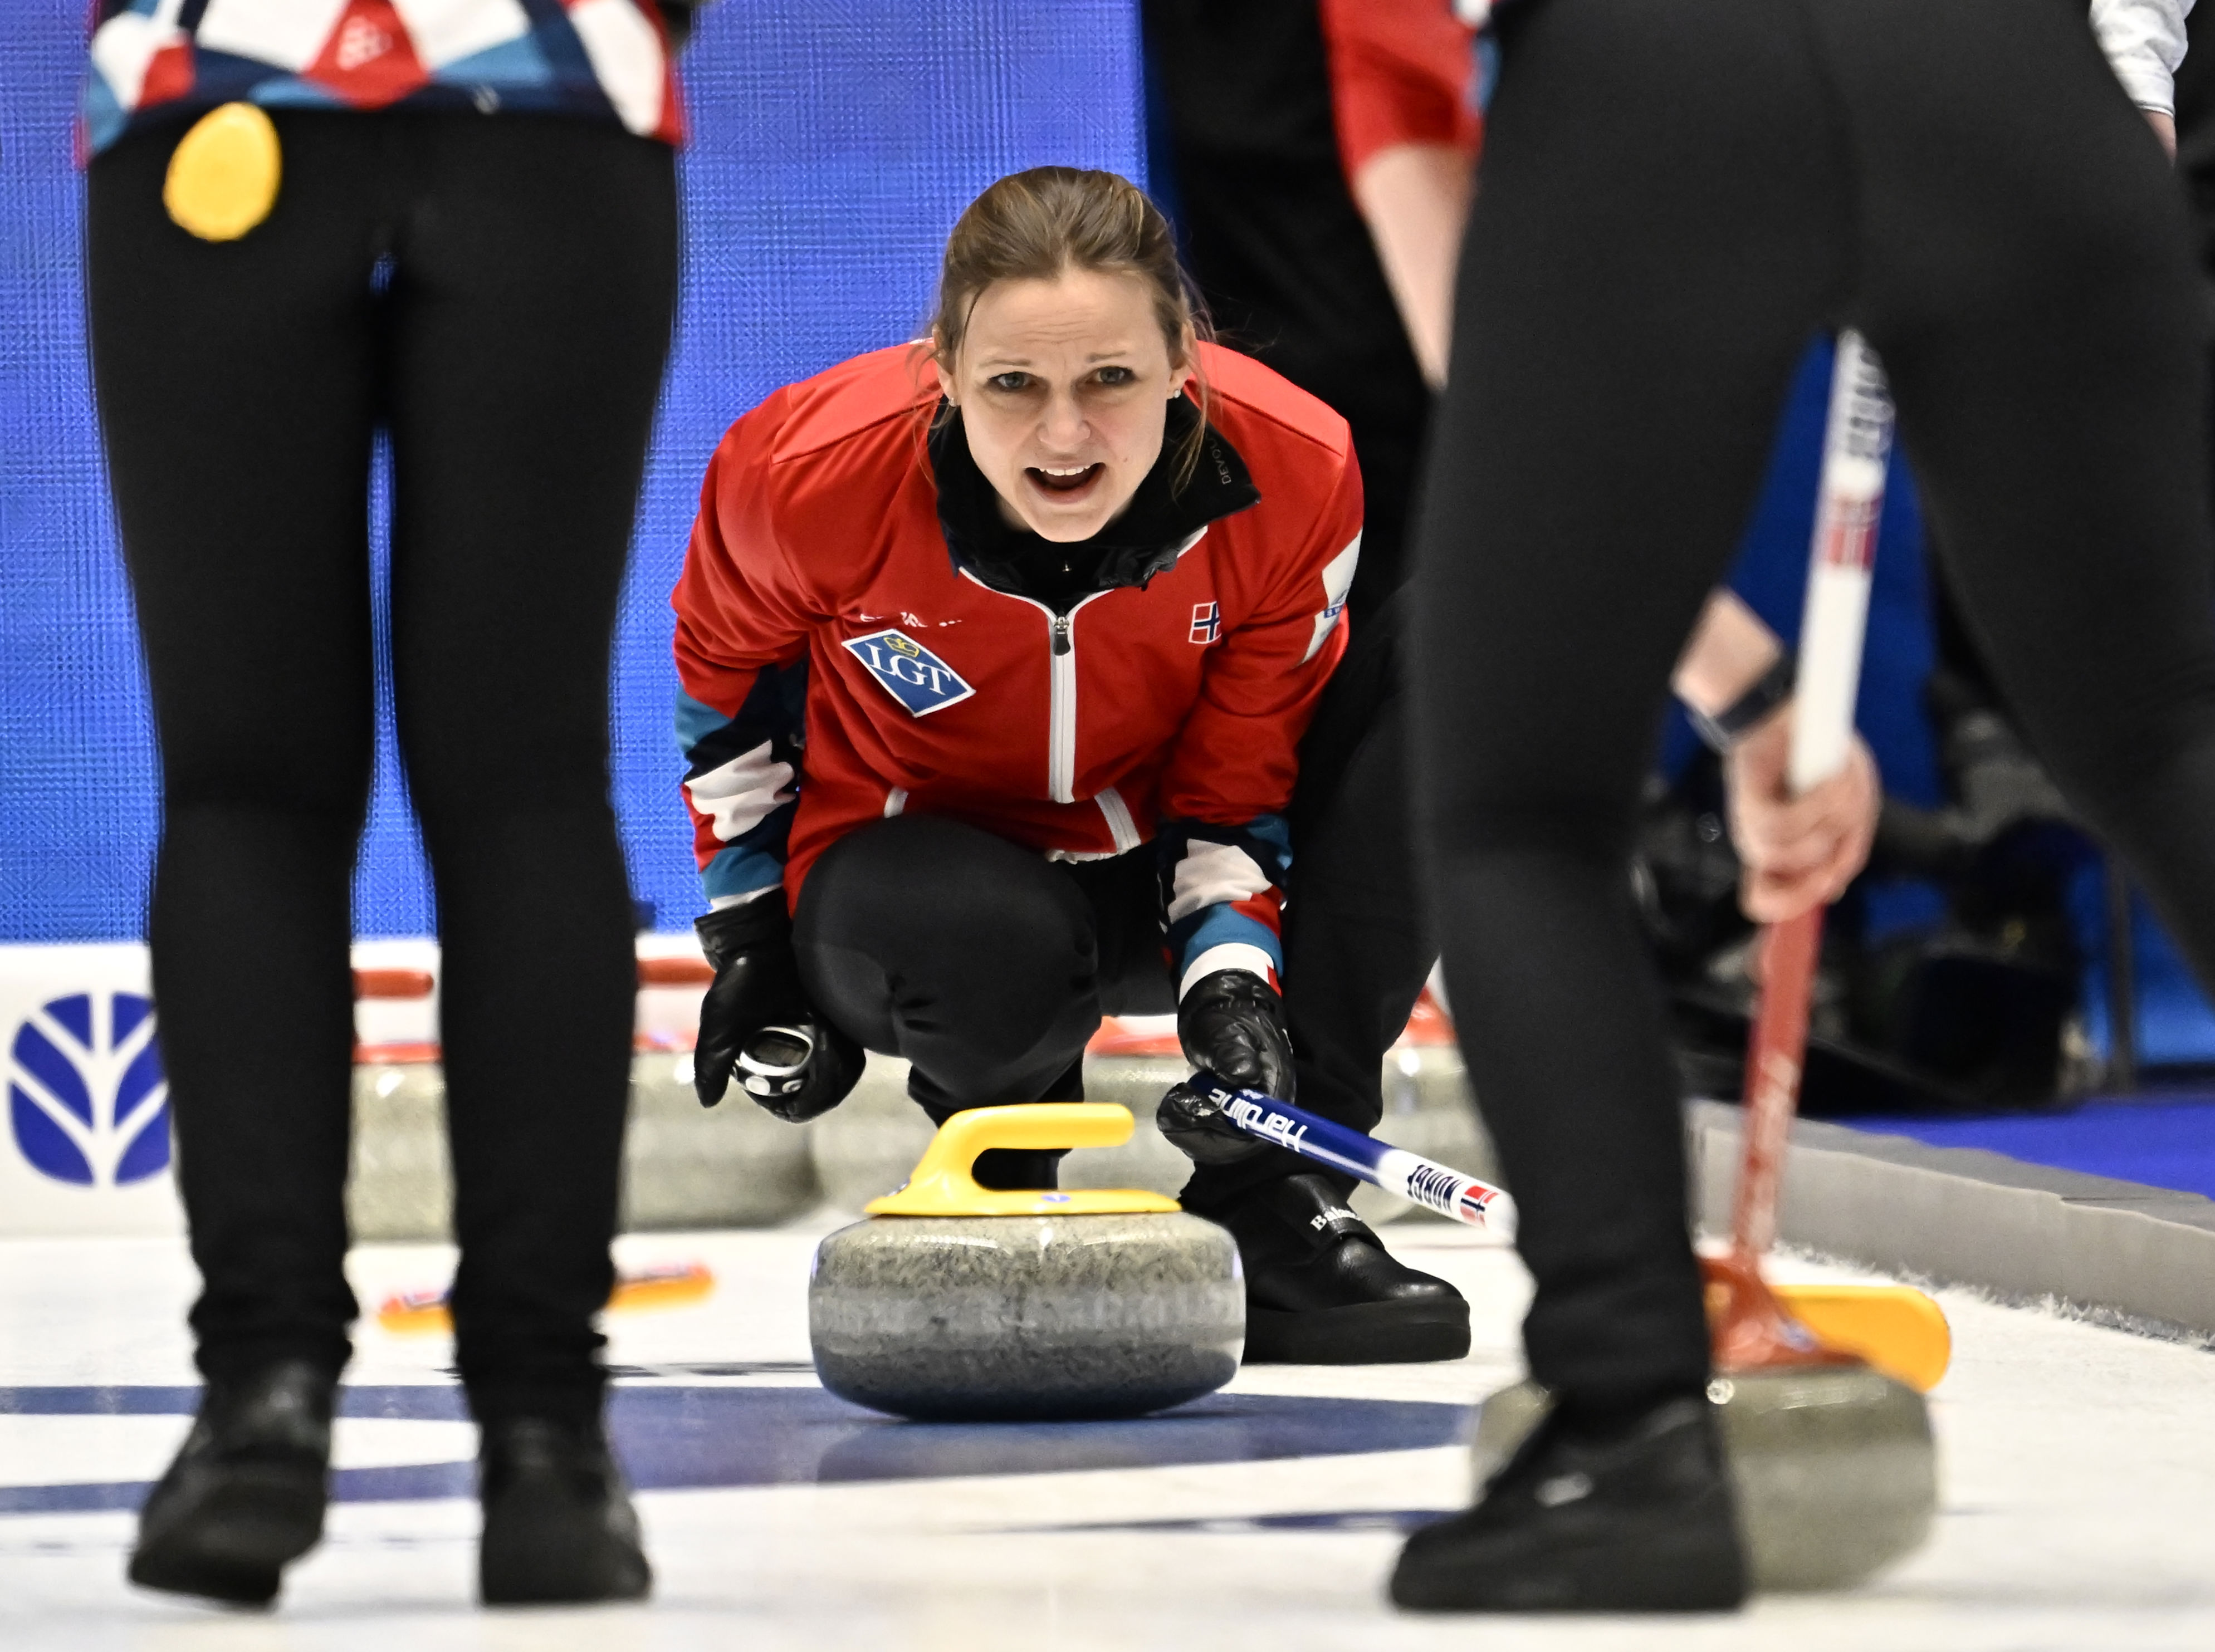 norge gikk på en smell mot sverige i curling-em